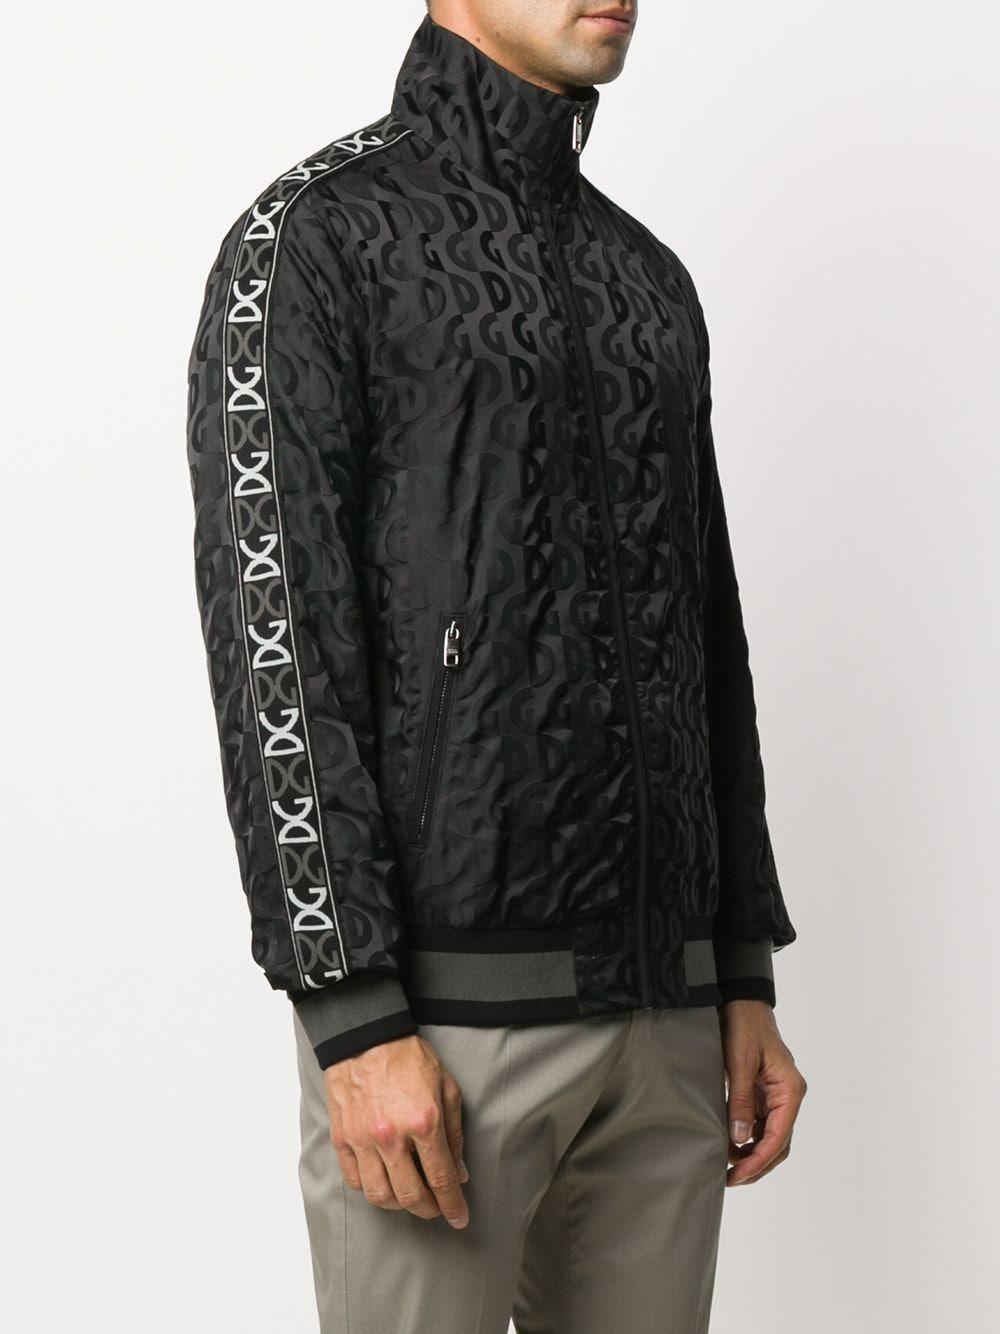 Dolce & Gabbana Jacquard Logo-tape Track Jacket in Black for Men - Lyst